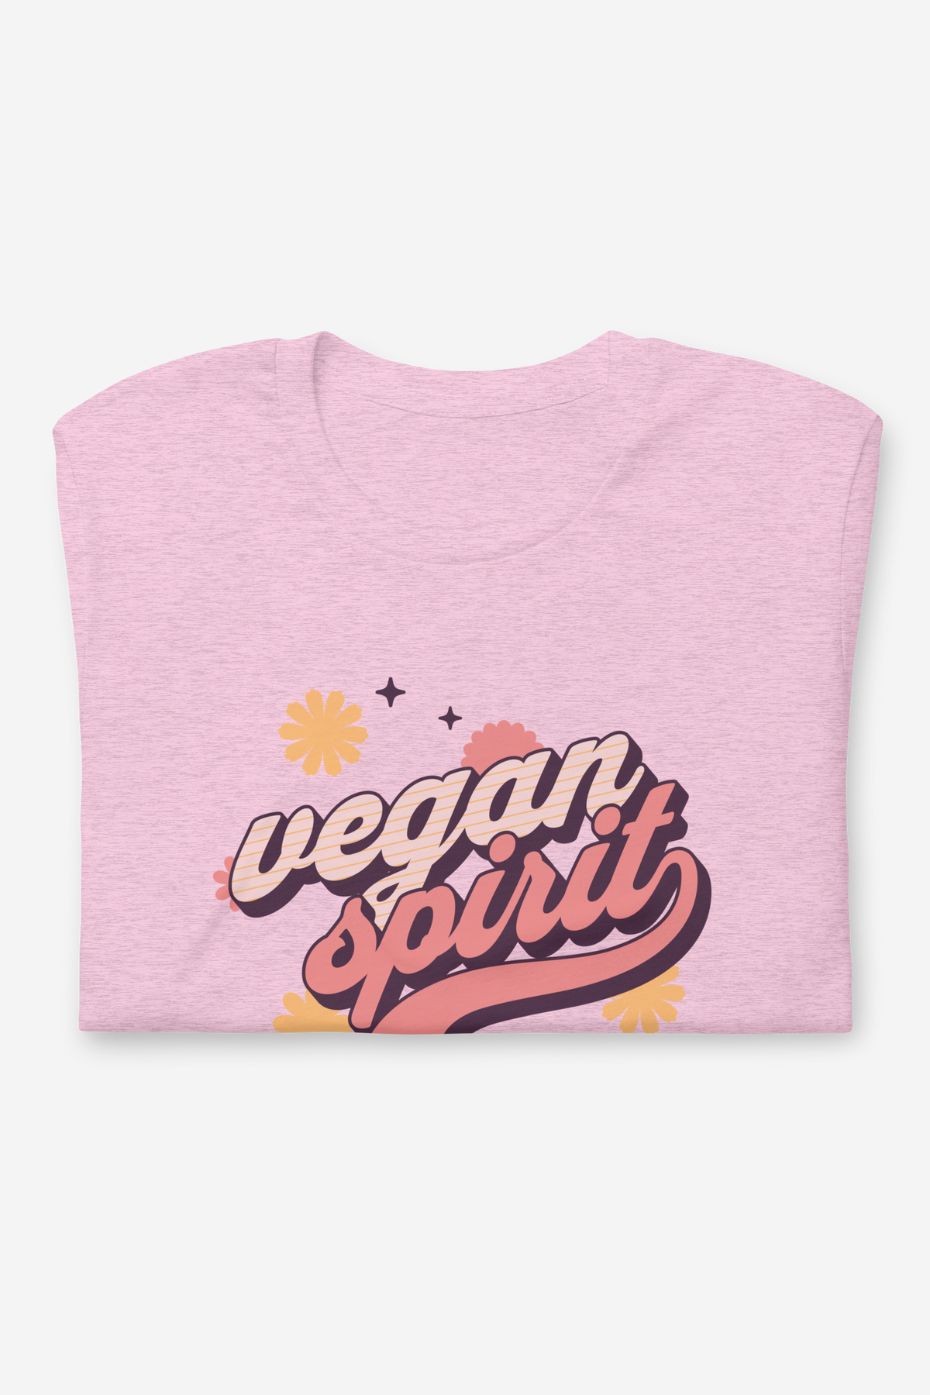 Vegan Spirit - Unisex t-shirt